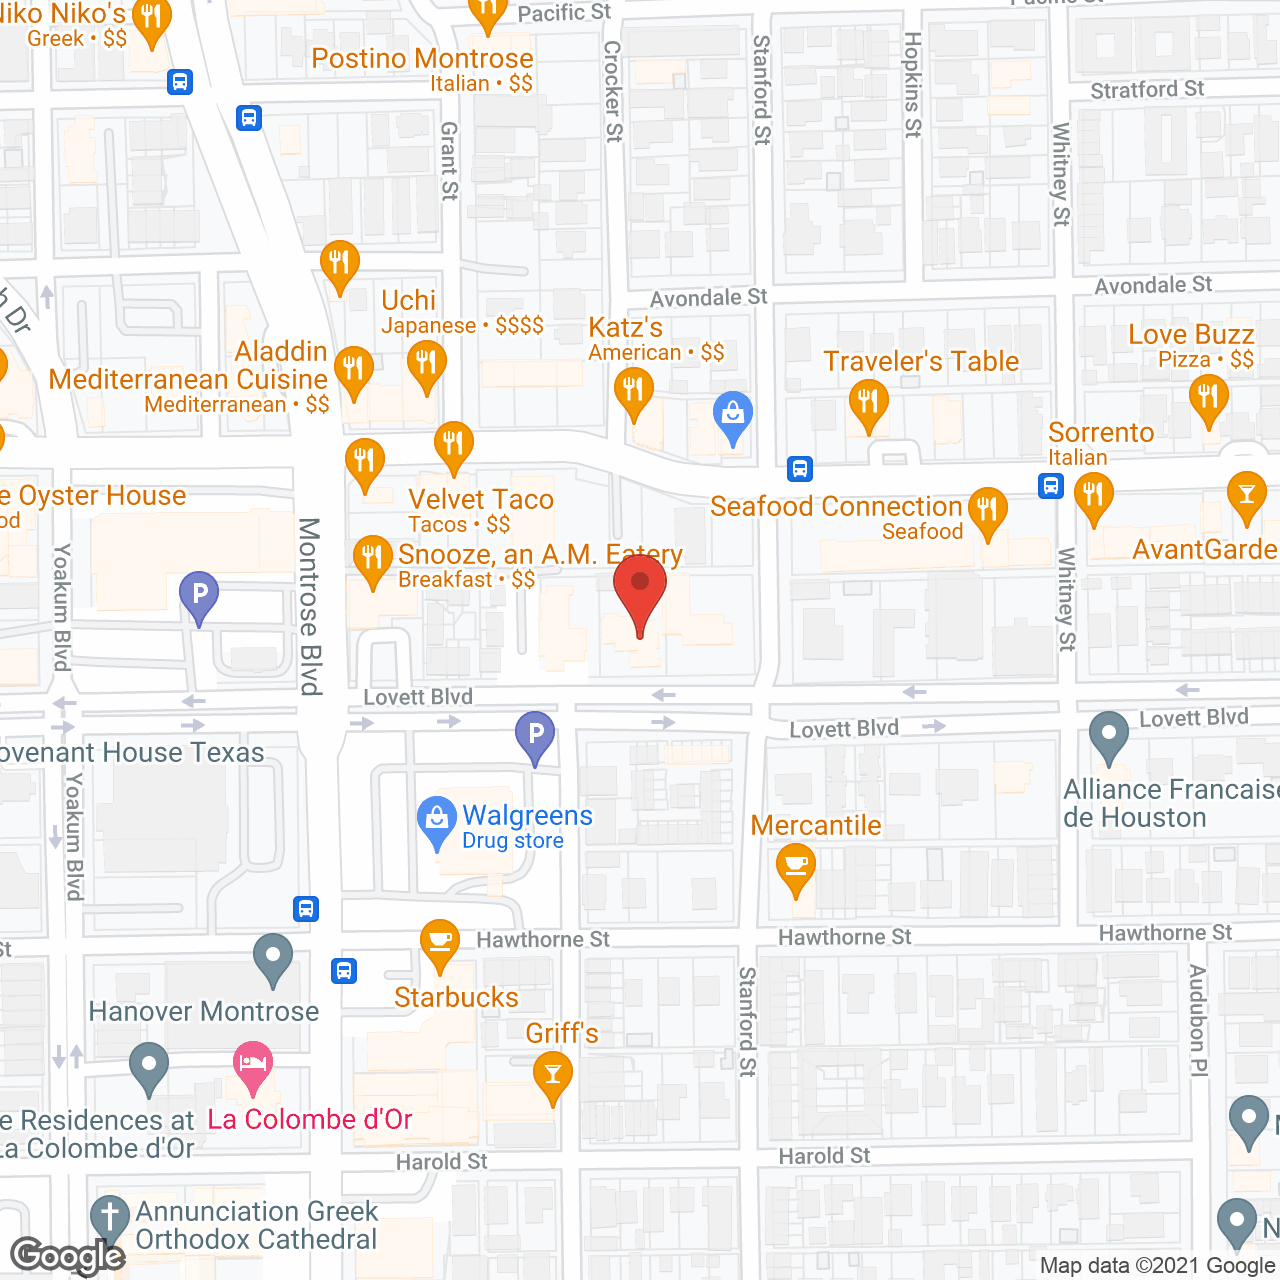 Lovett Place in google map